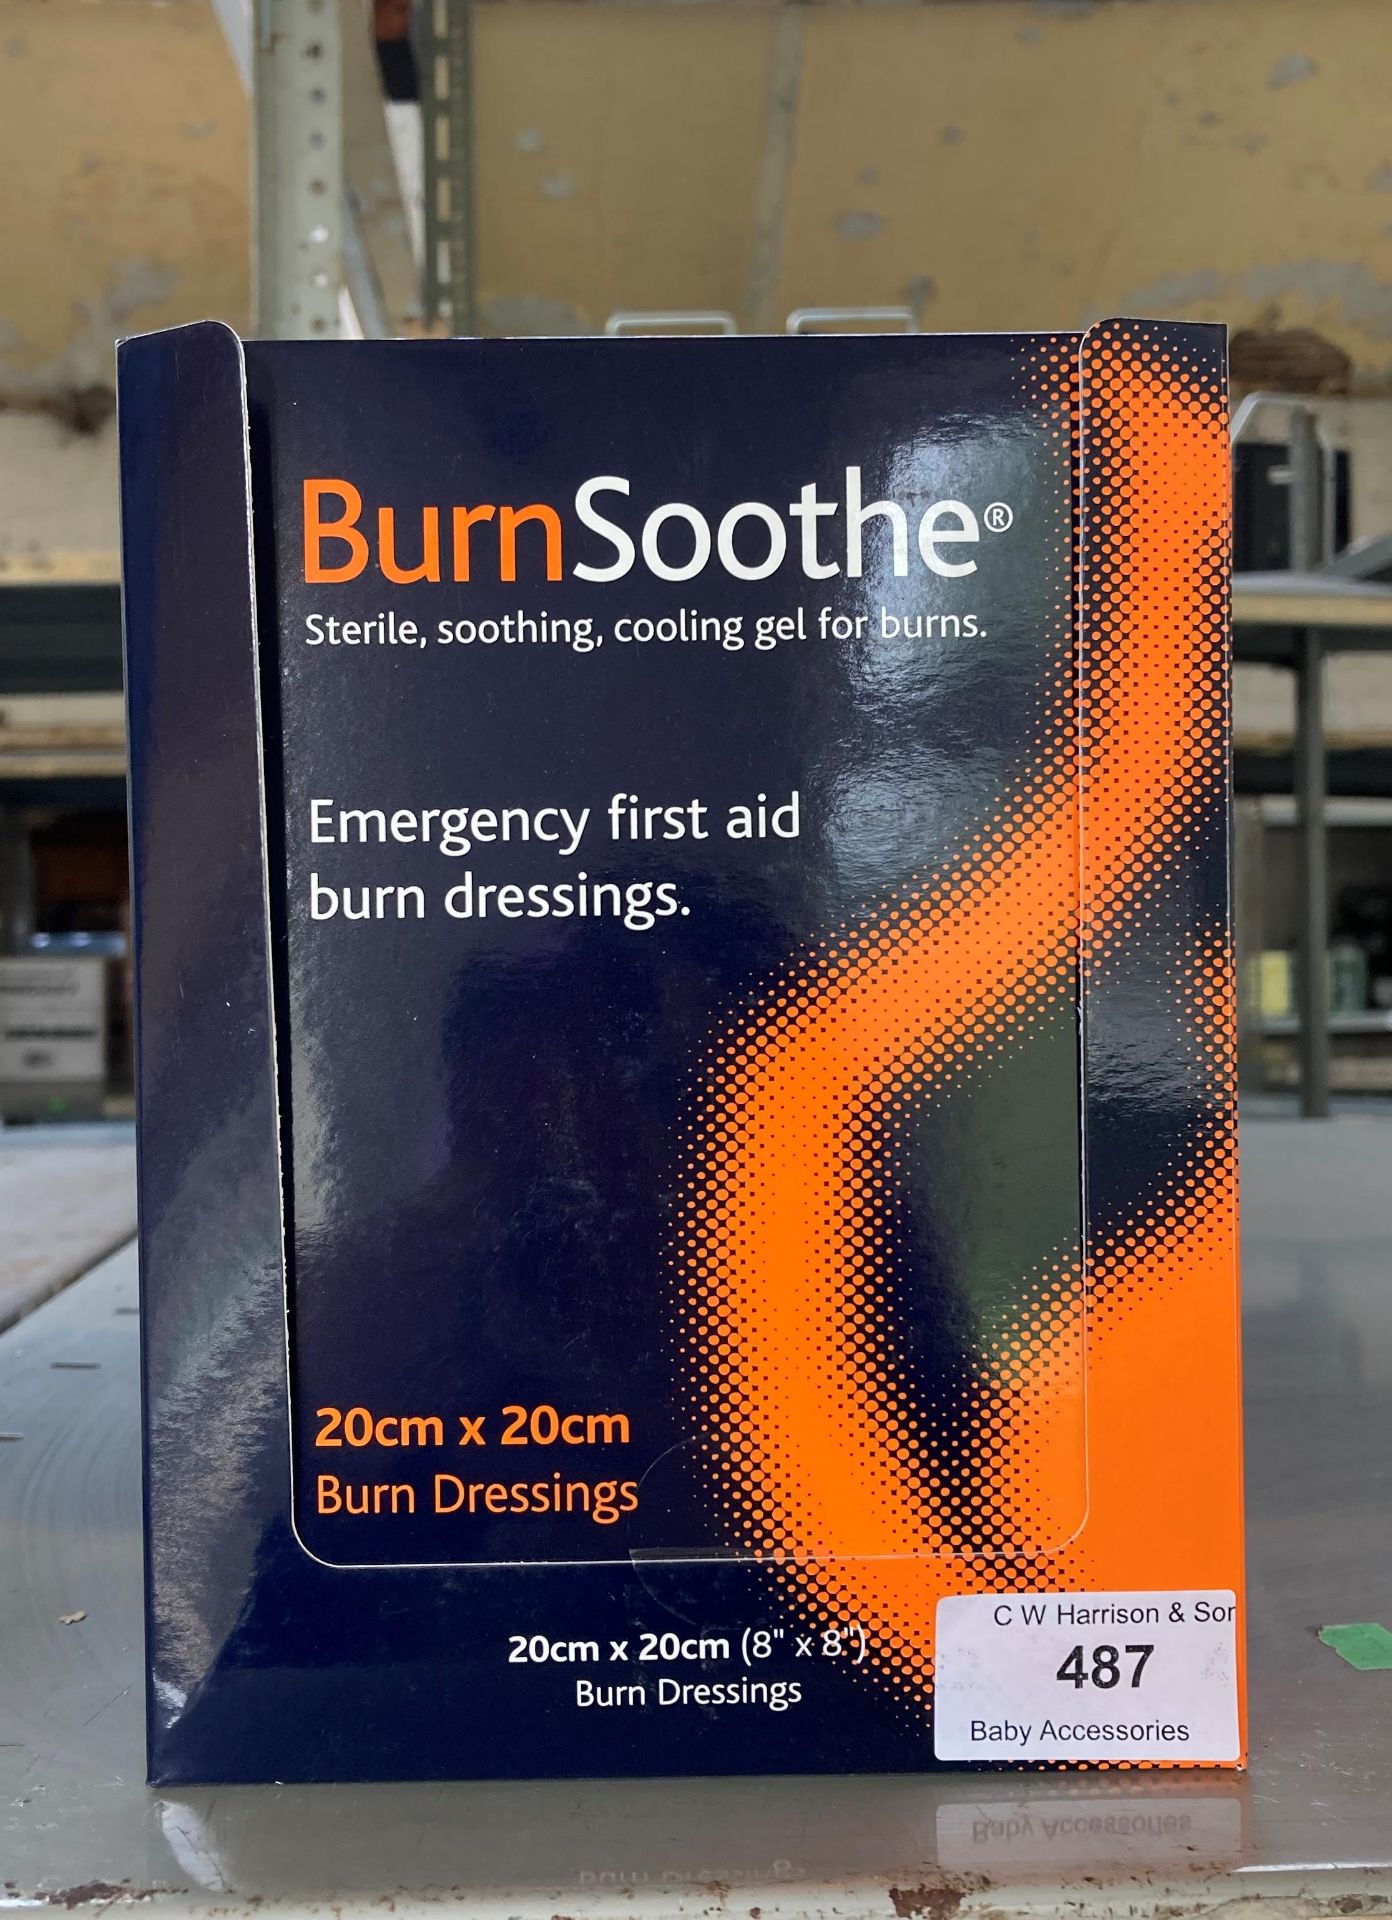 6 x boxes of 5 BurnSooth burn dressings (20cm x 20cm) (saleroom location: Sunnybank Street,